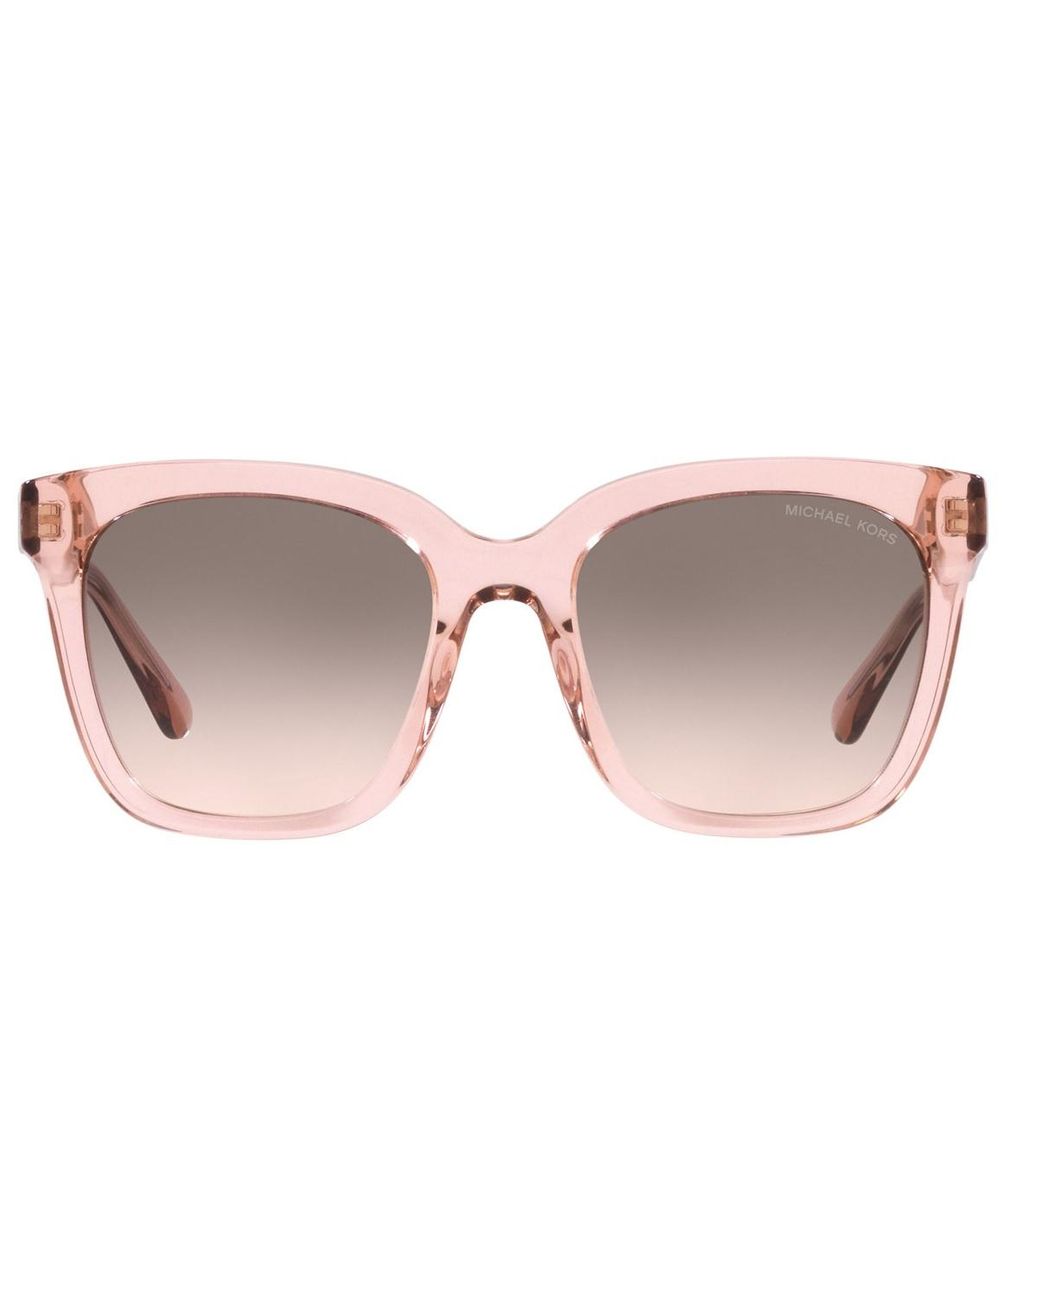 Michael Kors Pink Gray Gradient Square Sunglasses in Black | Lyst